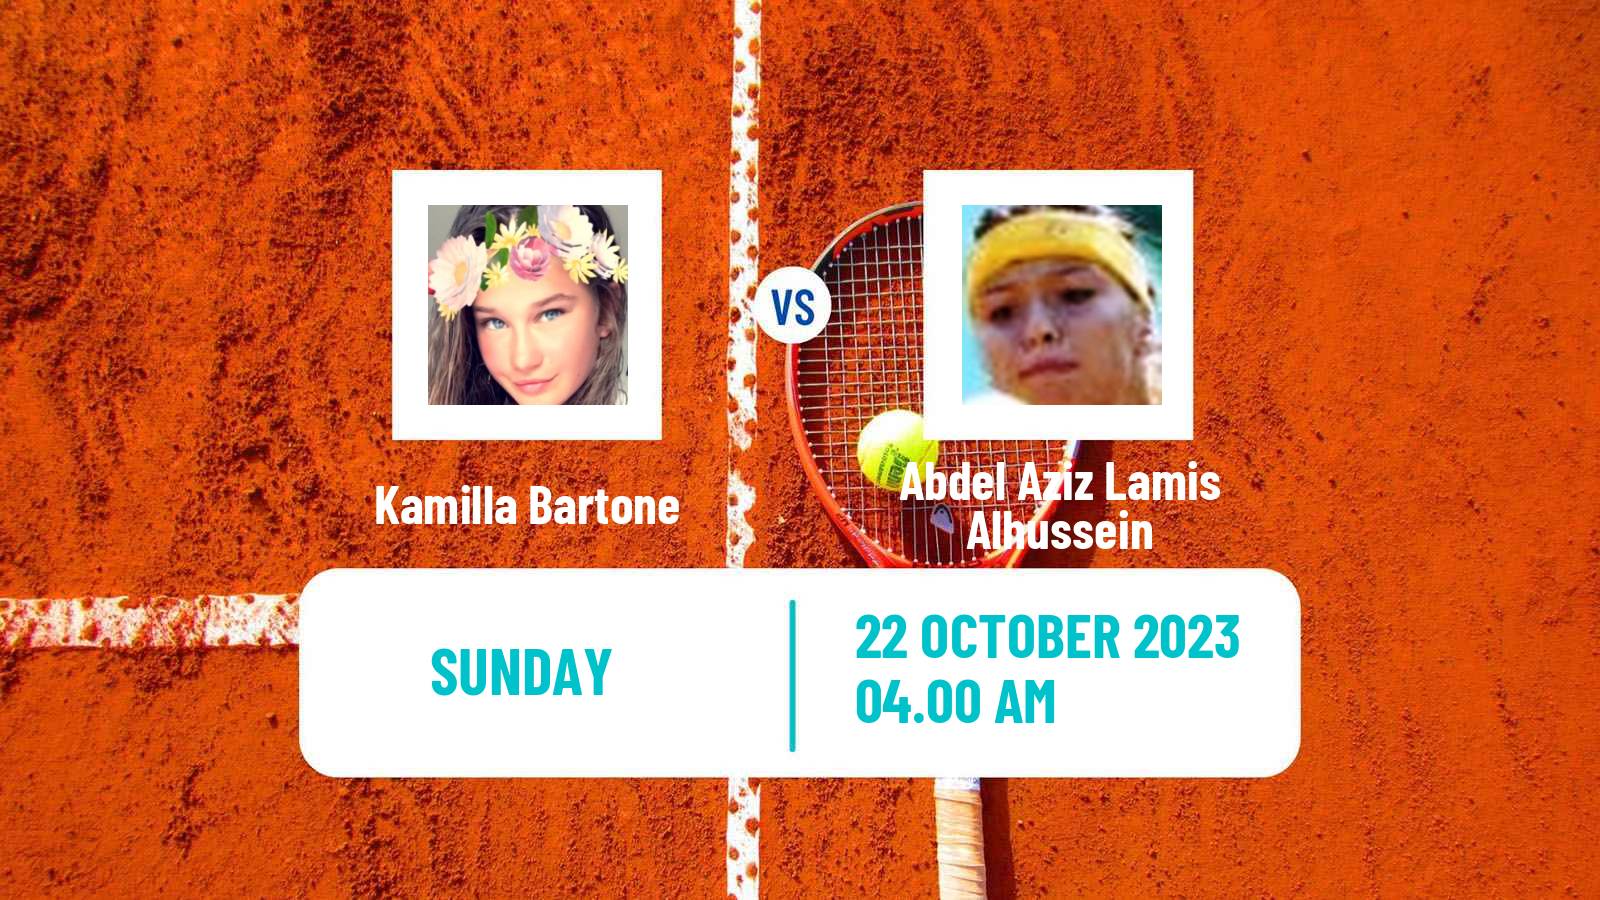 Tennis ITF W15 Sharm Elsheikh 15 Women Kamilla Bartone - Abdel Aziz Lamis Alhussein